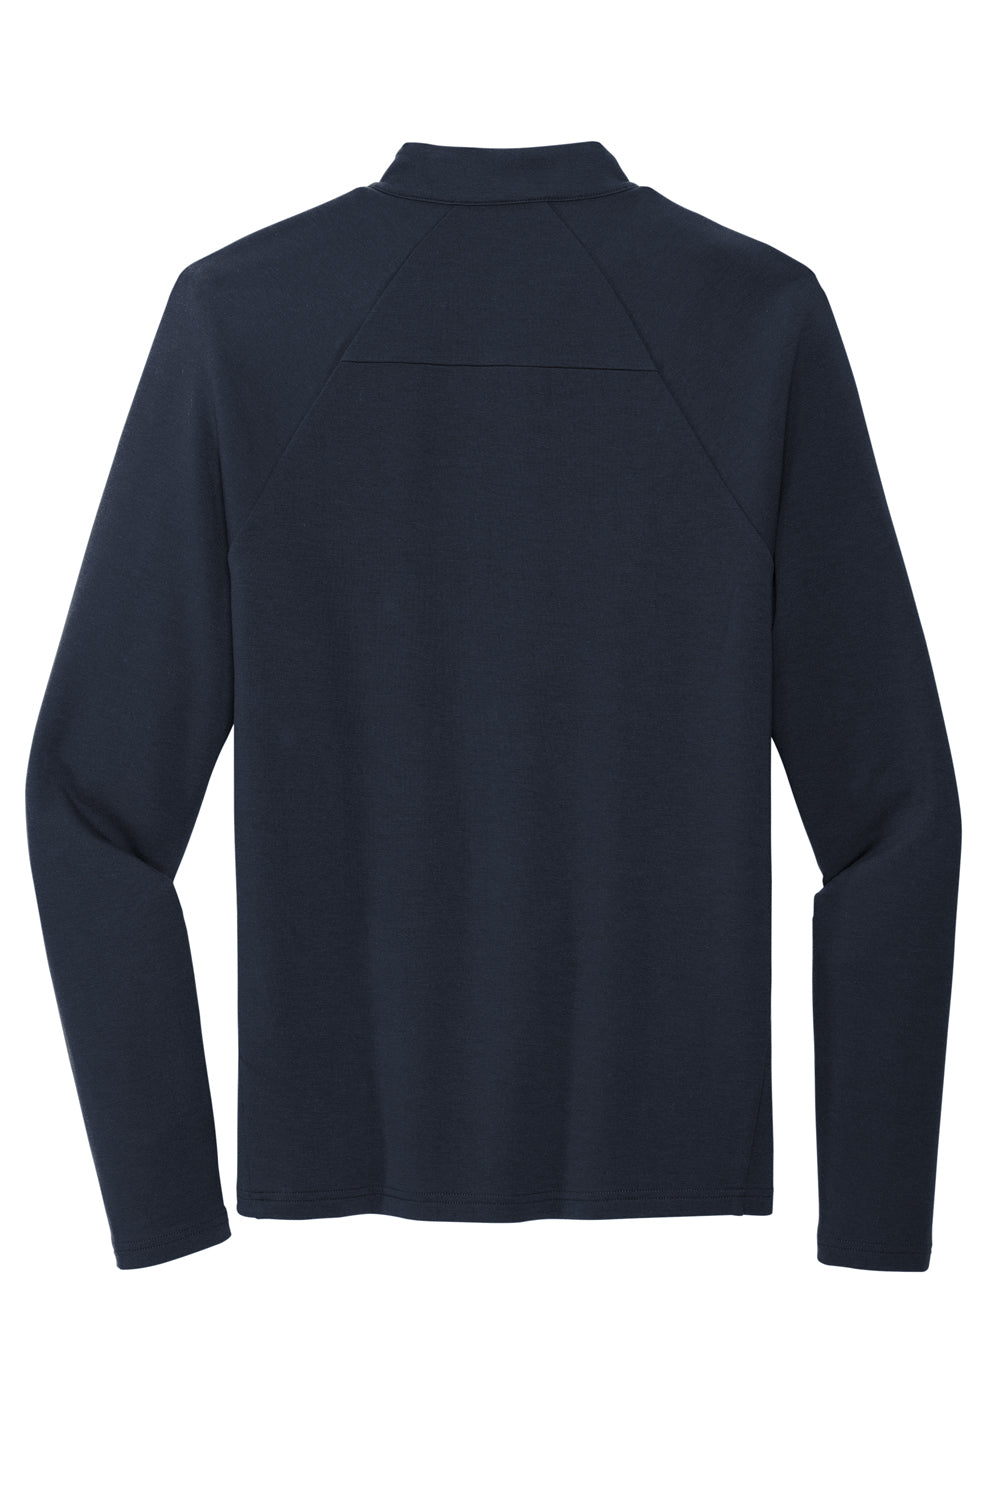 Mercer+Mettle MM3010 Stretch 1/4 Zip Sweatshirt Night Navy Blue Flat Back